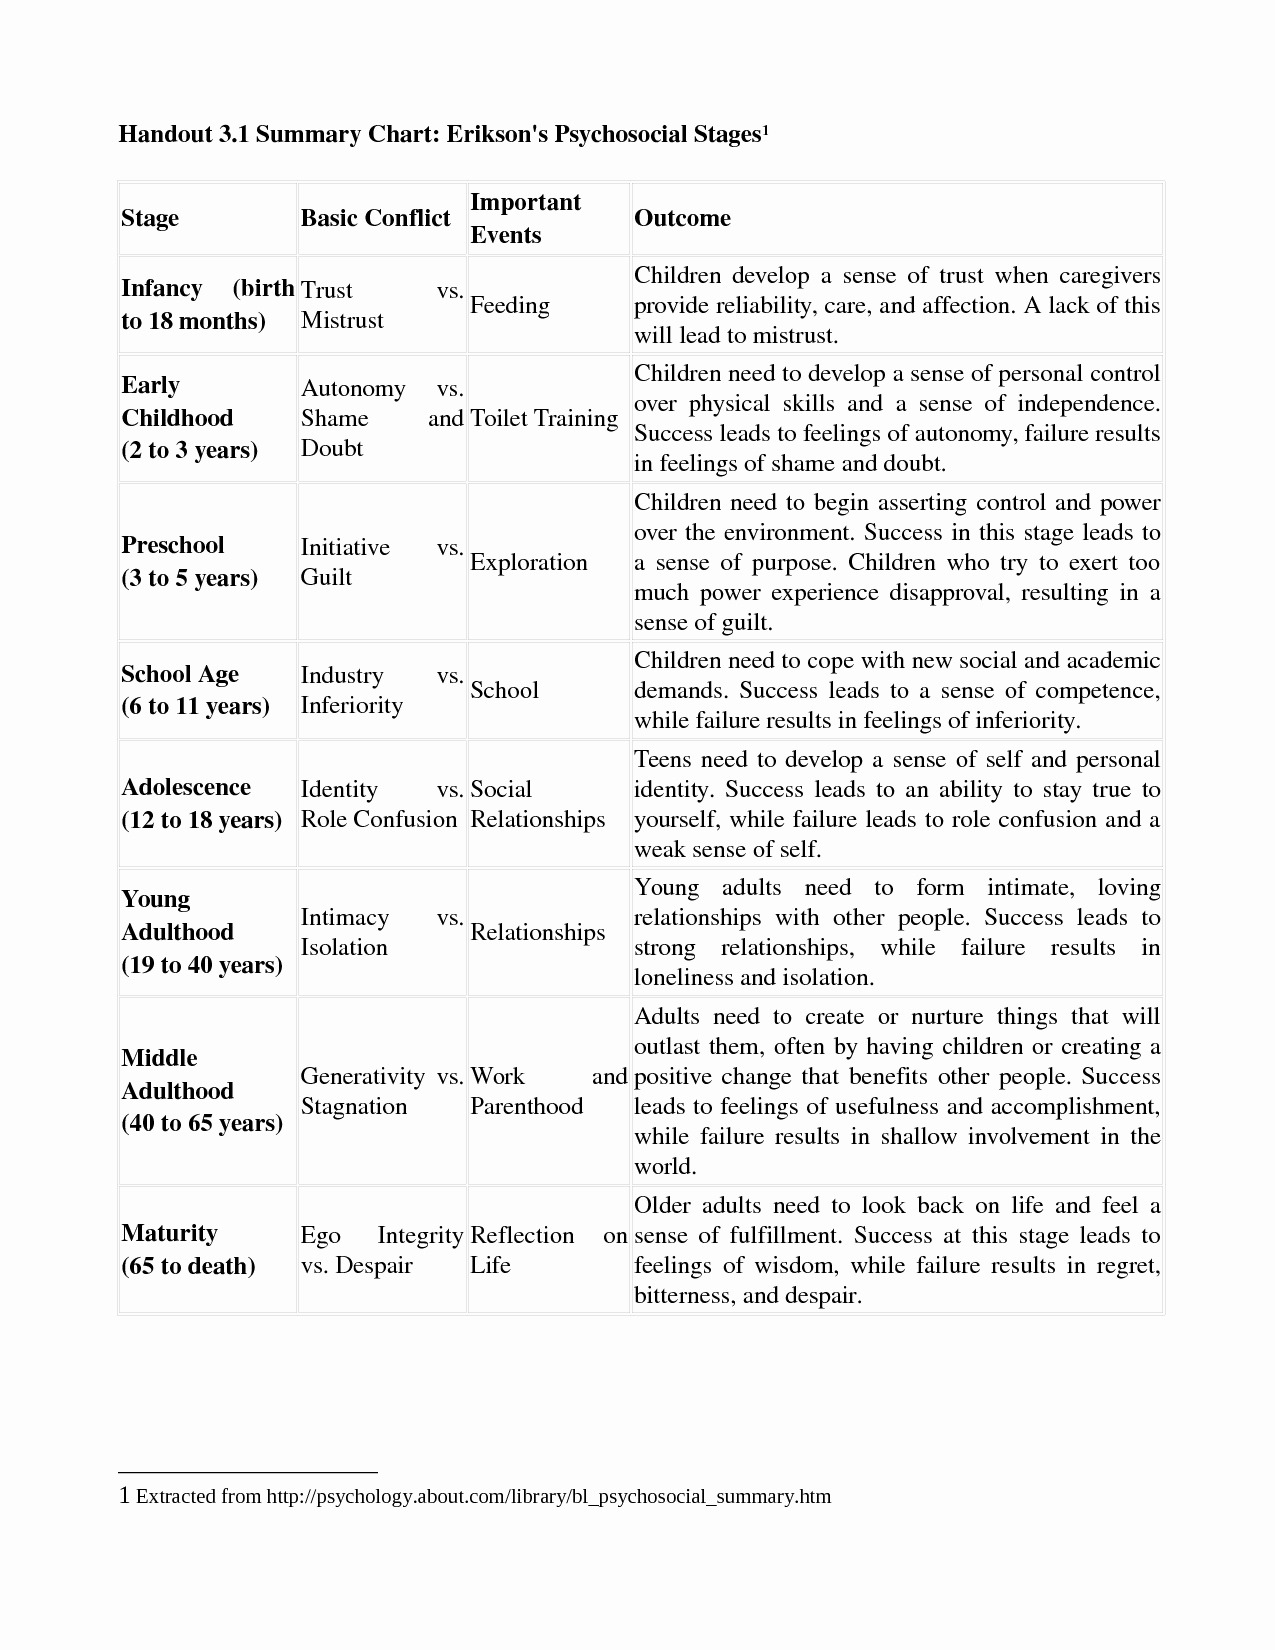 Erikson Stages Of Development Chart Pdf Elegant 6 Best Of Erik Erikson Psychosocial Stages